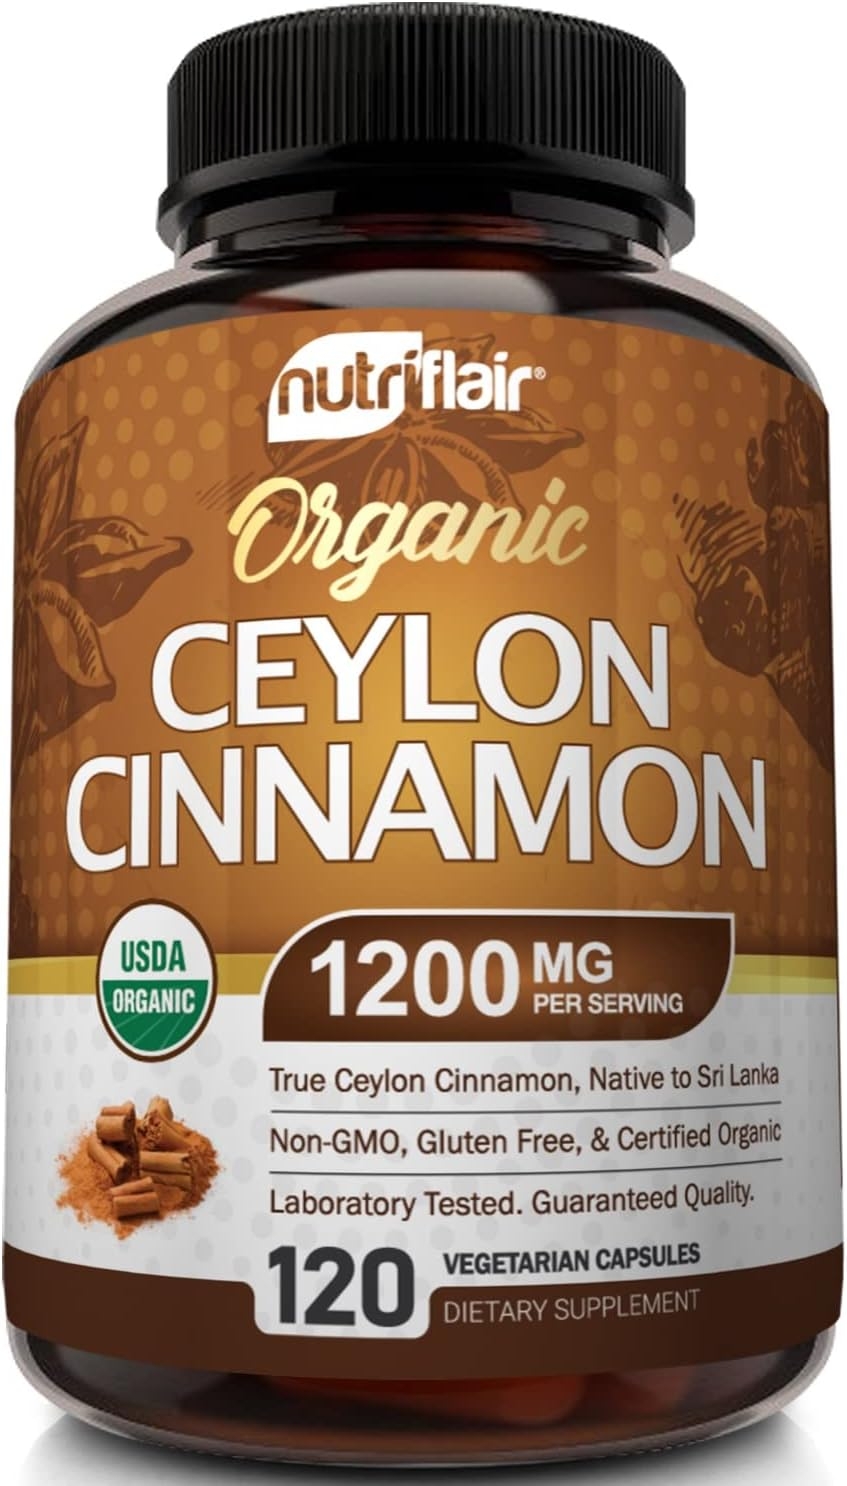 NutriFlair Organic Ceylon Cinnamon (100% Certified Organic Ceylon Cinnamon) 1200mg per Serving, 120 Capsules - Joints, Inflammatory, Antioxidant, Glucose Metabolism Support- True Sri Lanka Cinnamon